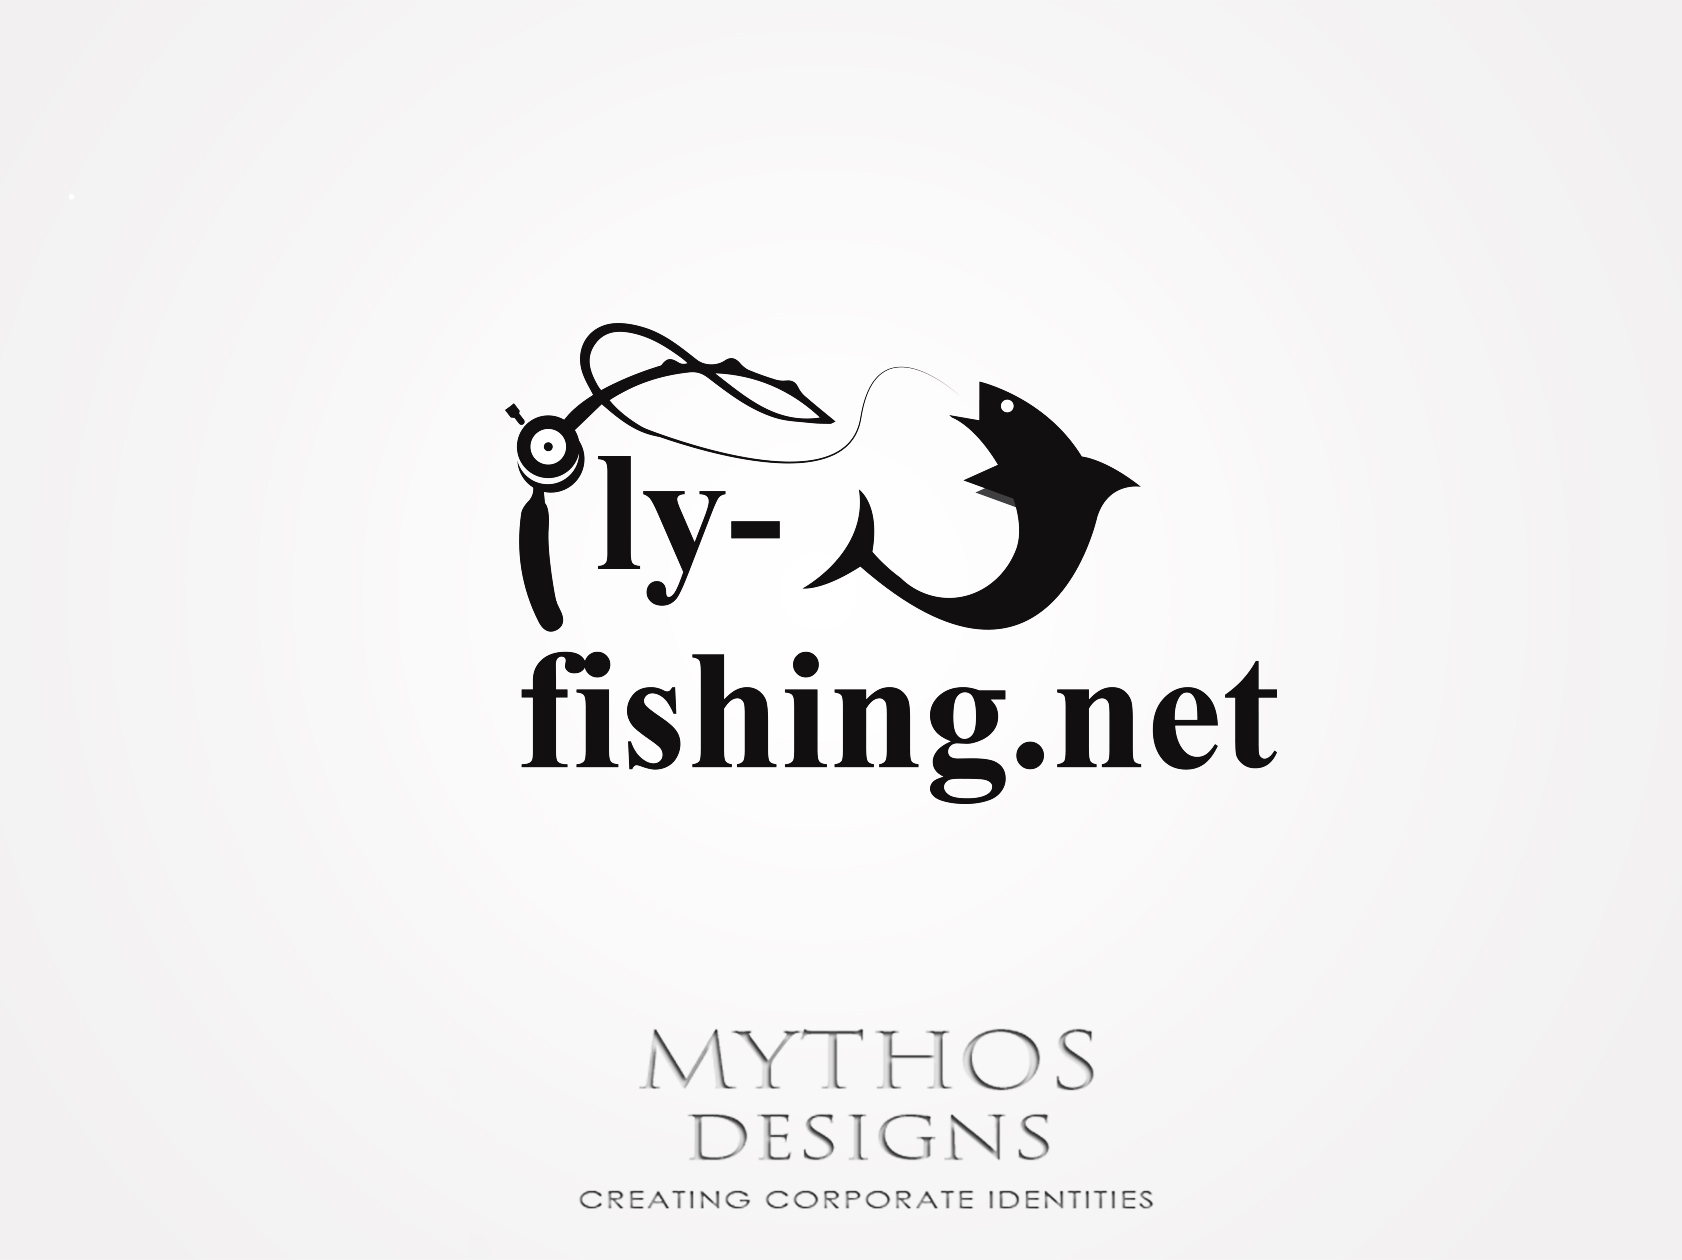 Mythos Logo - Logo Design Contests Artistic Logo Design For Fly Fishing.net